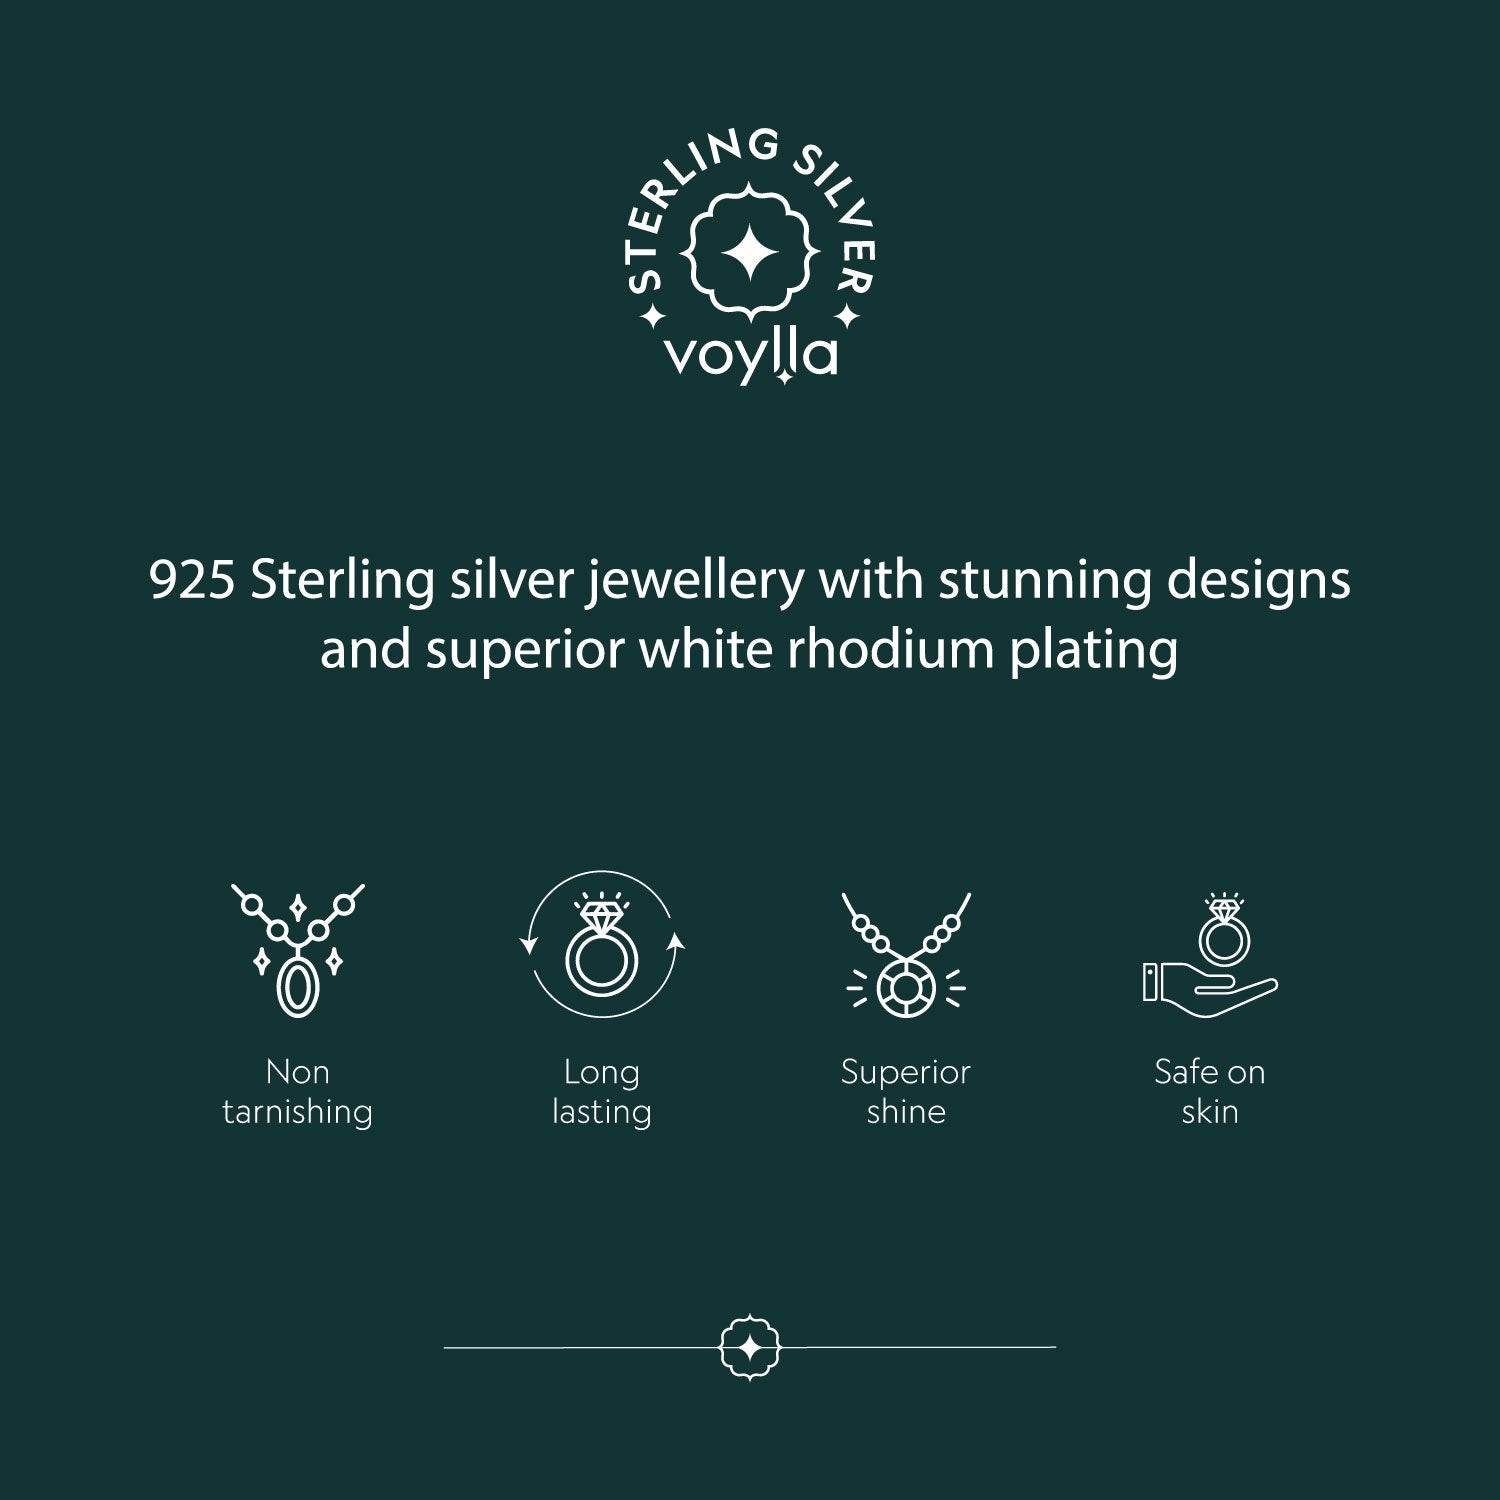 Stylish 925 Sterling Silver necklace